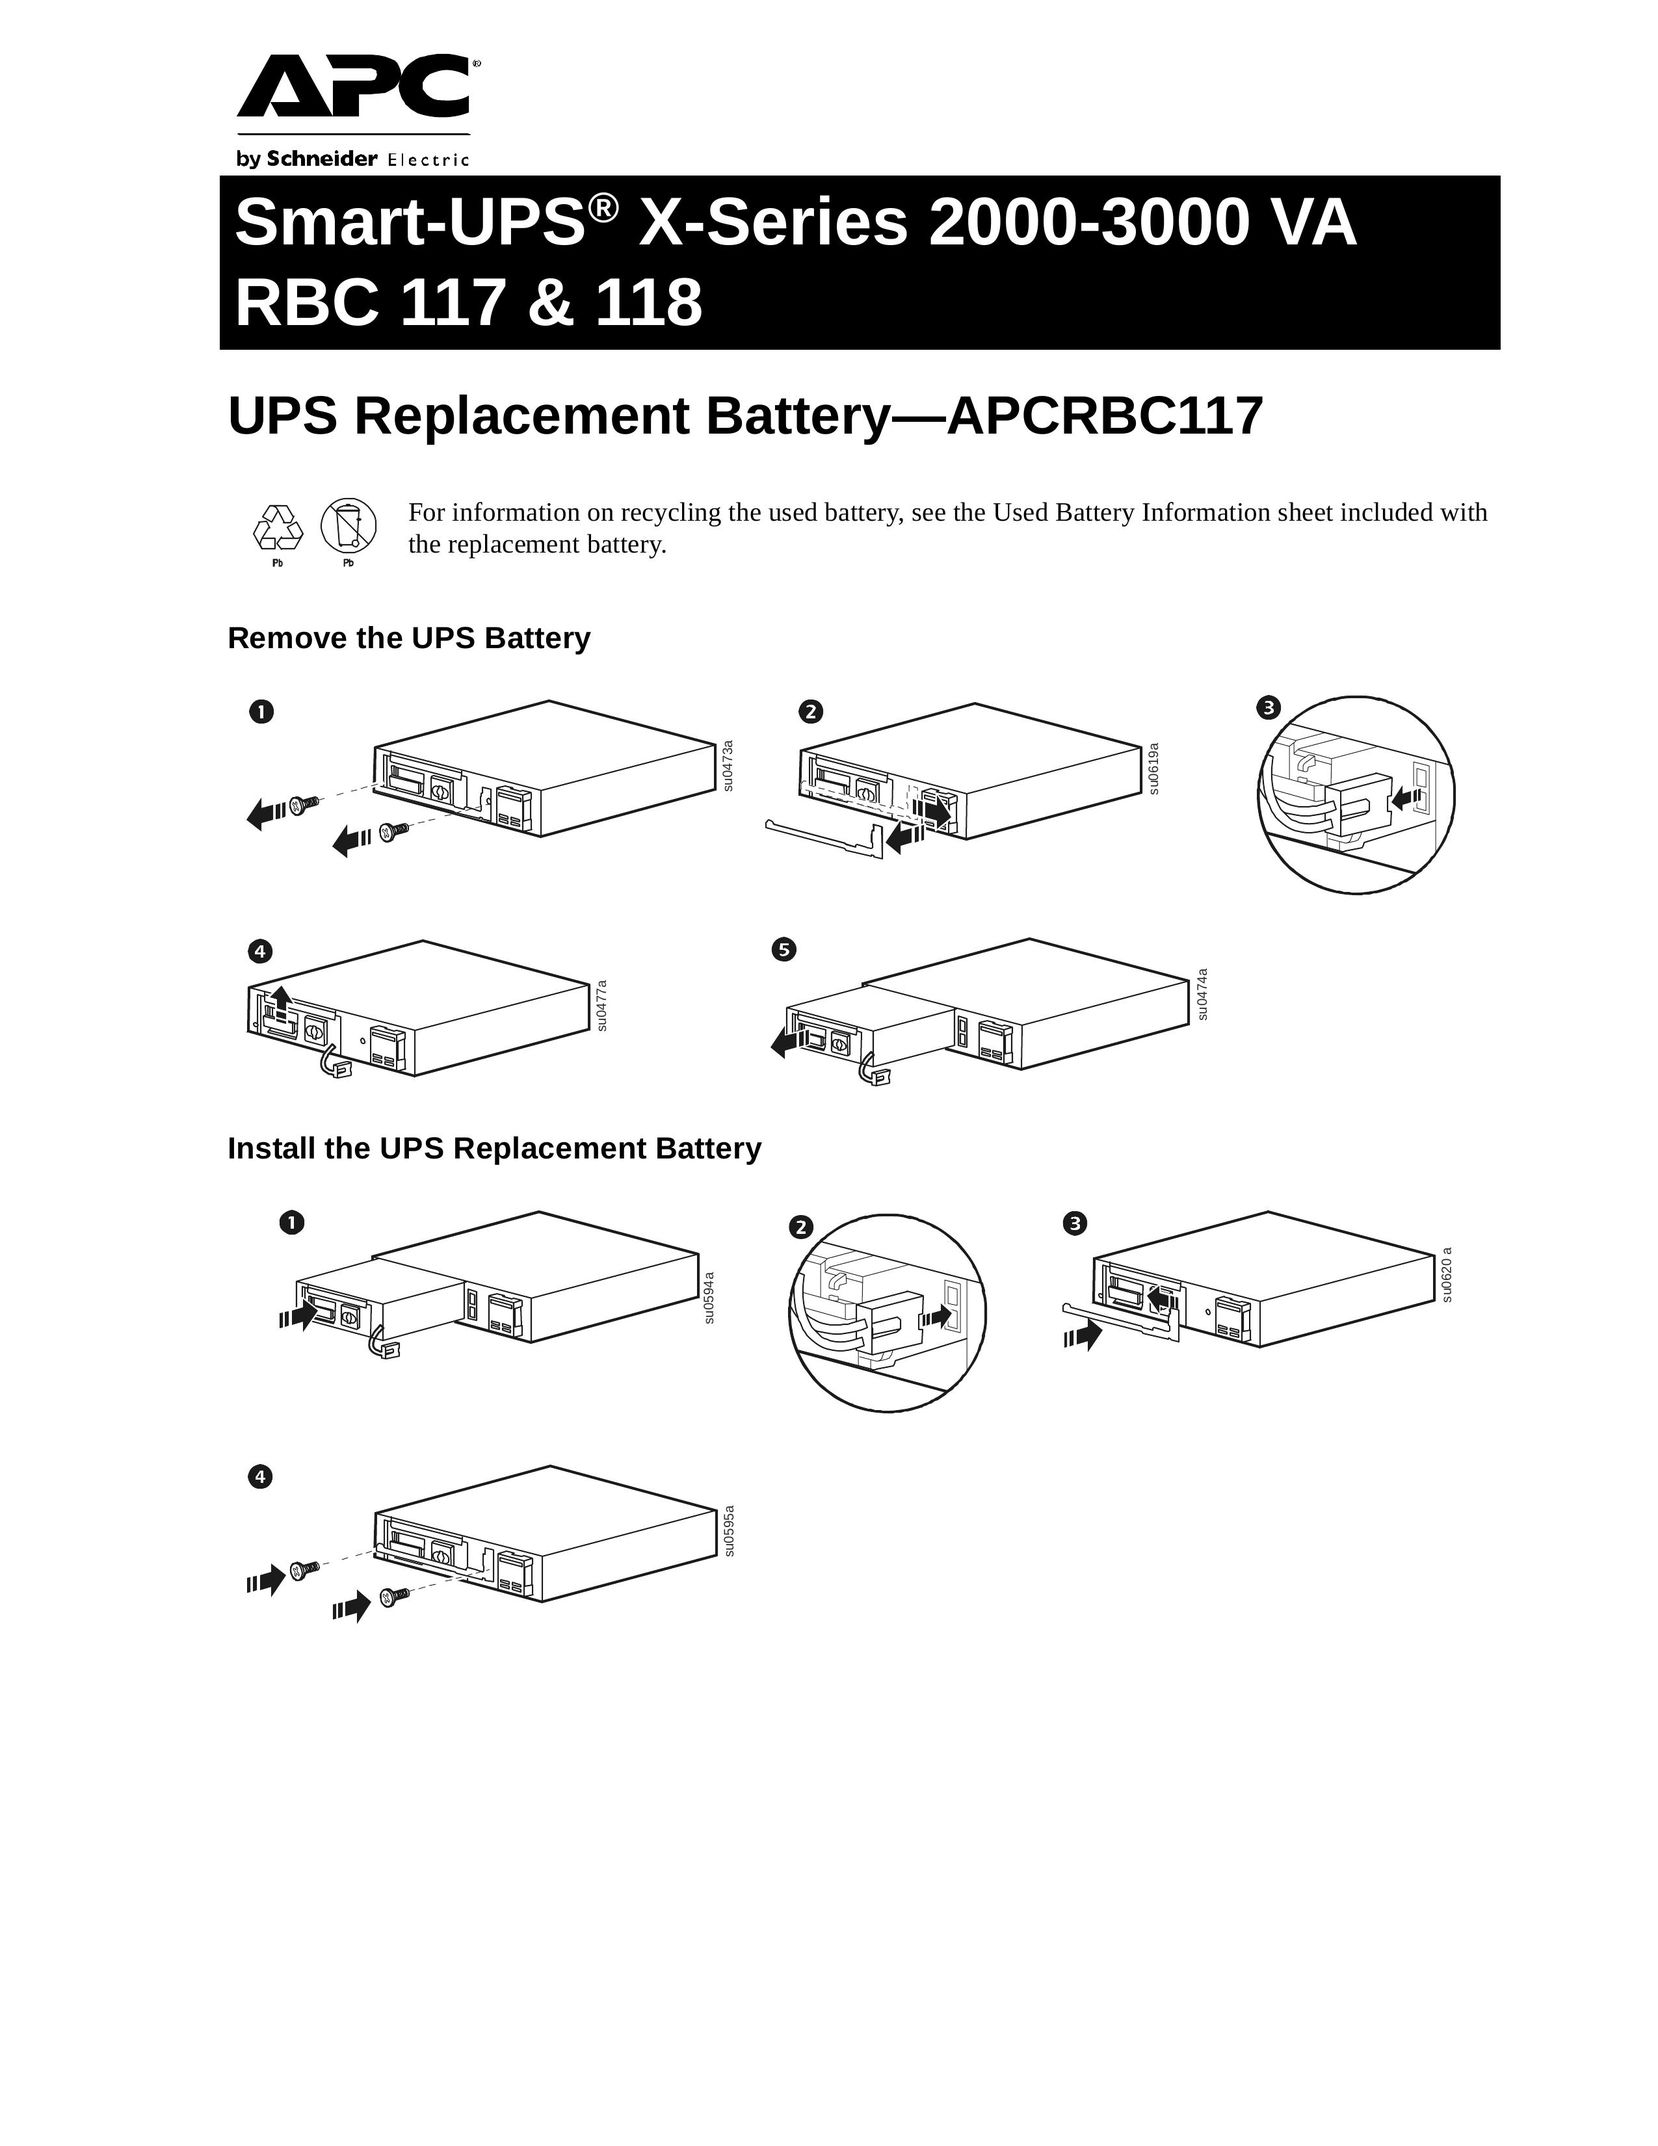 APC 2000 VA Battery Charger User Manual